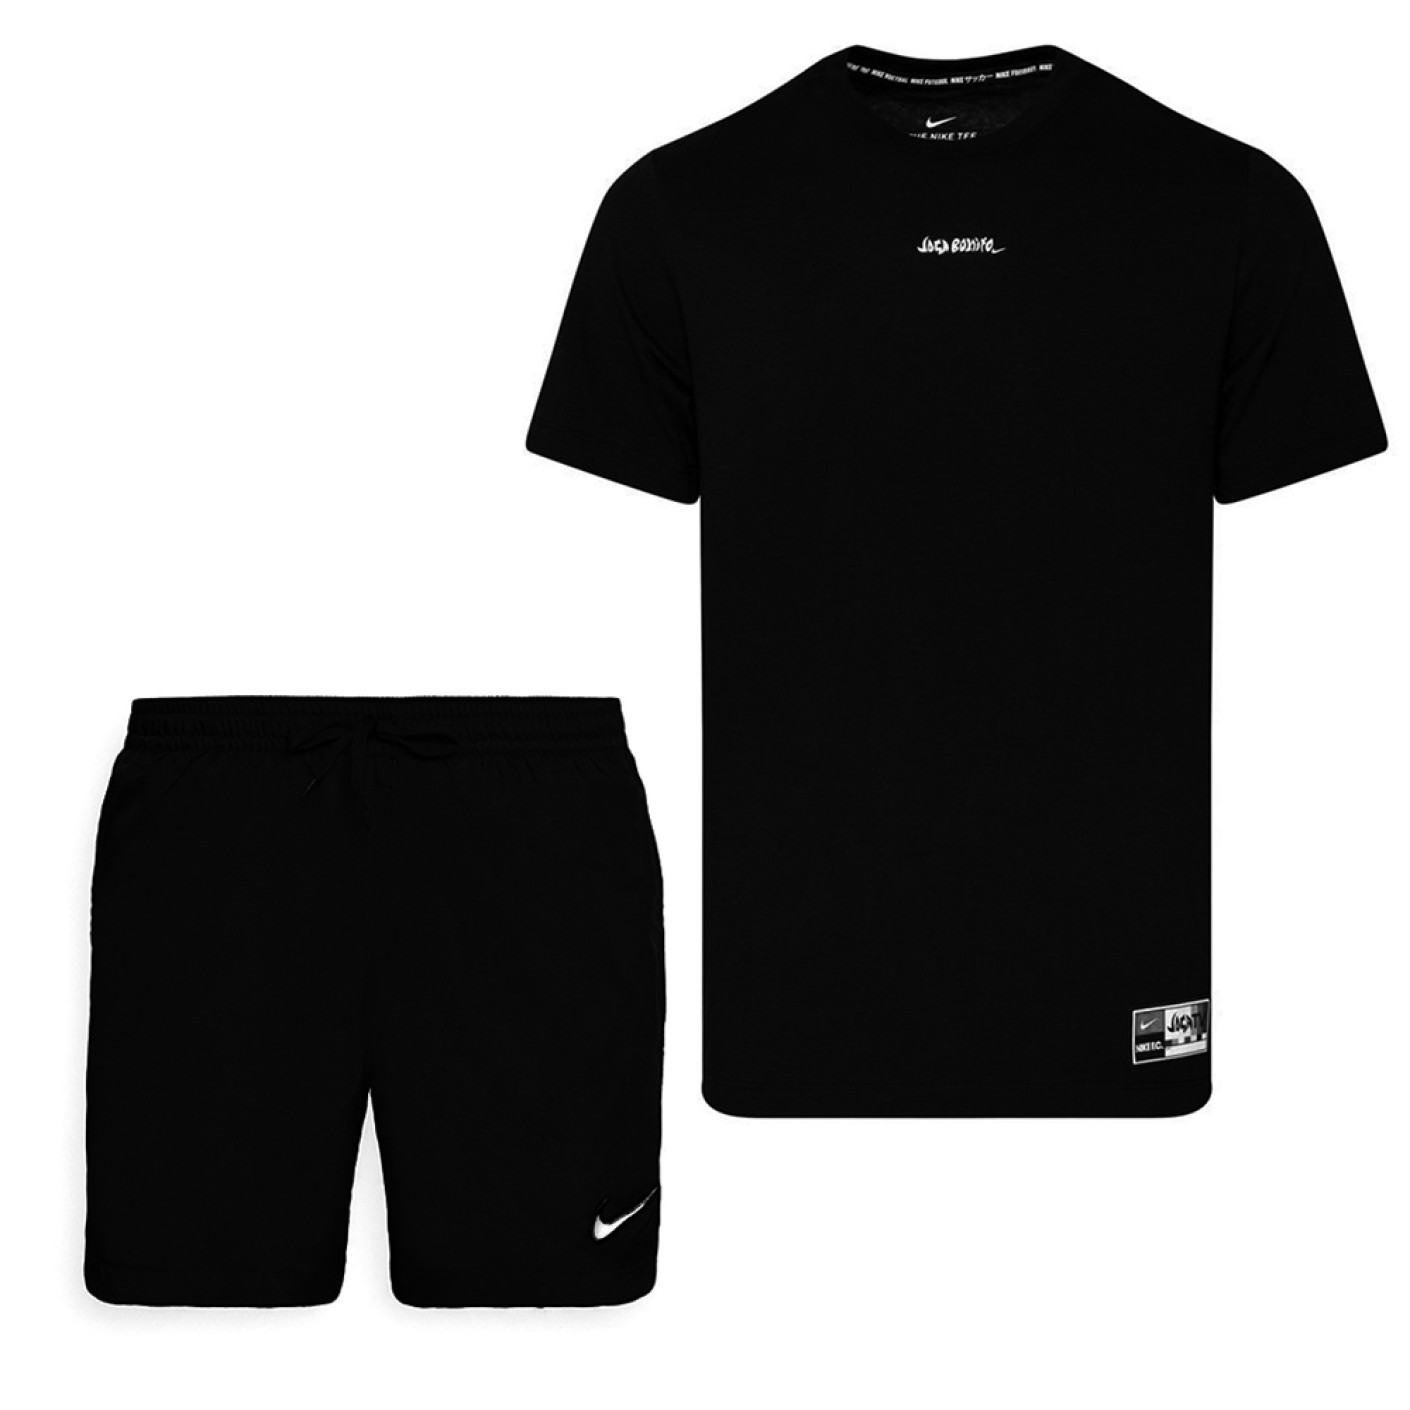 Nike F.C. Joga Bonito Zomerset Zwart